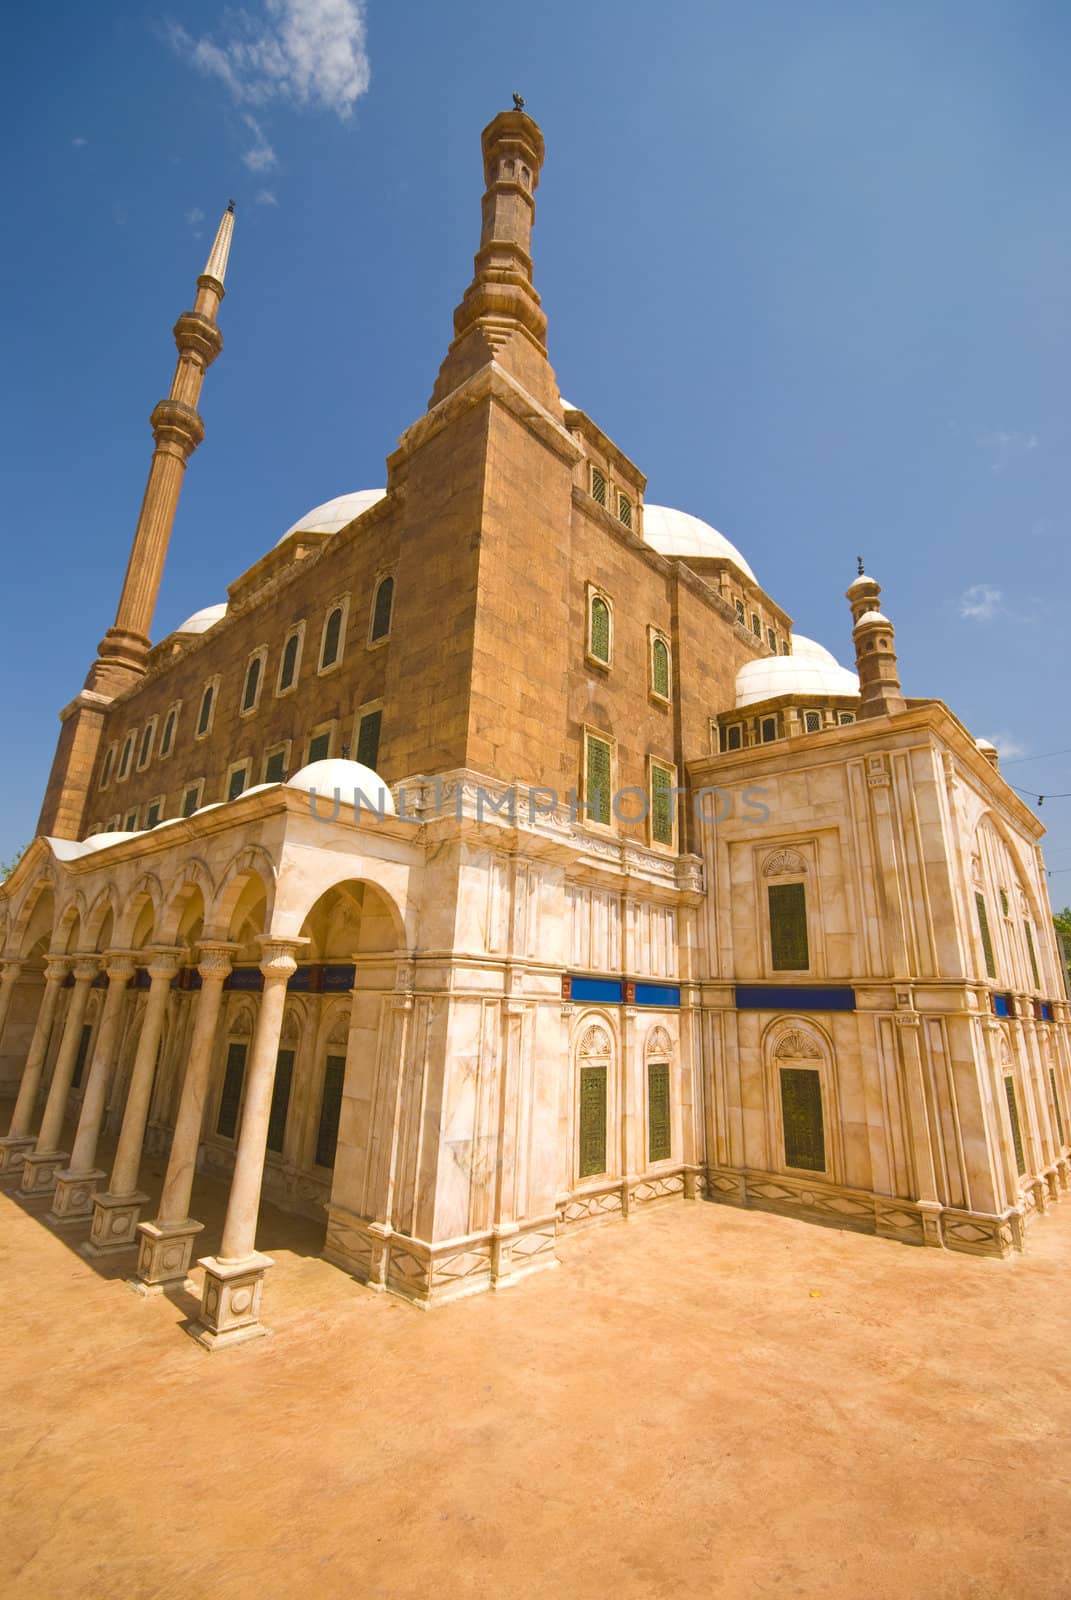  muhamad ali mosque ,cairo